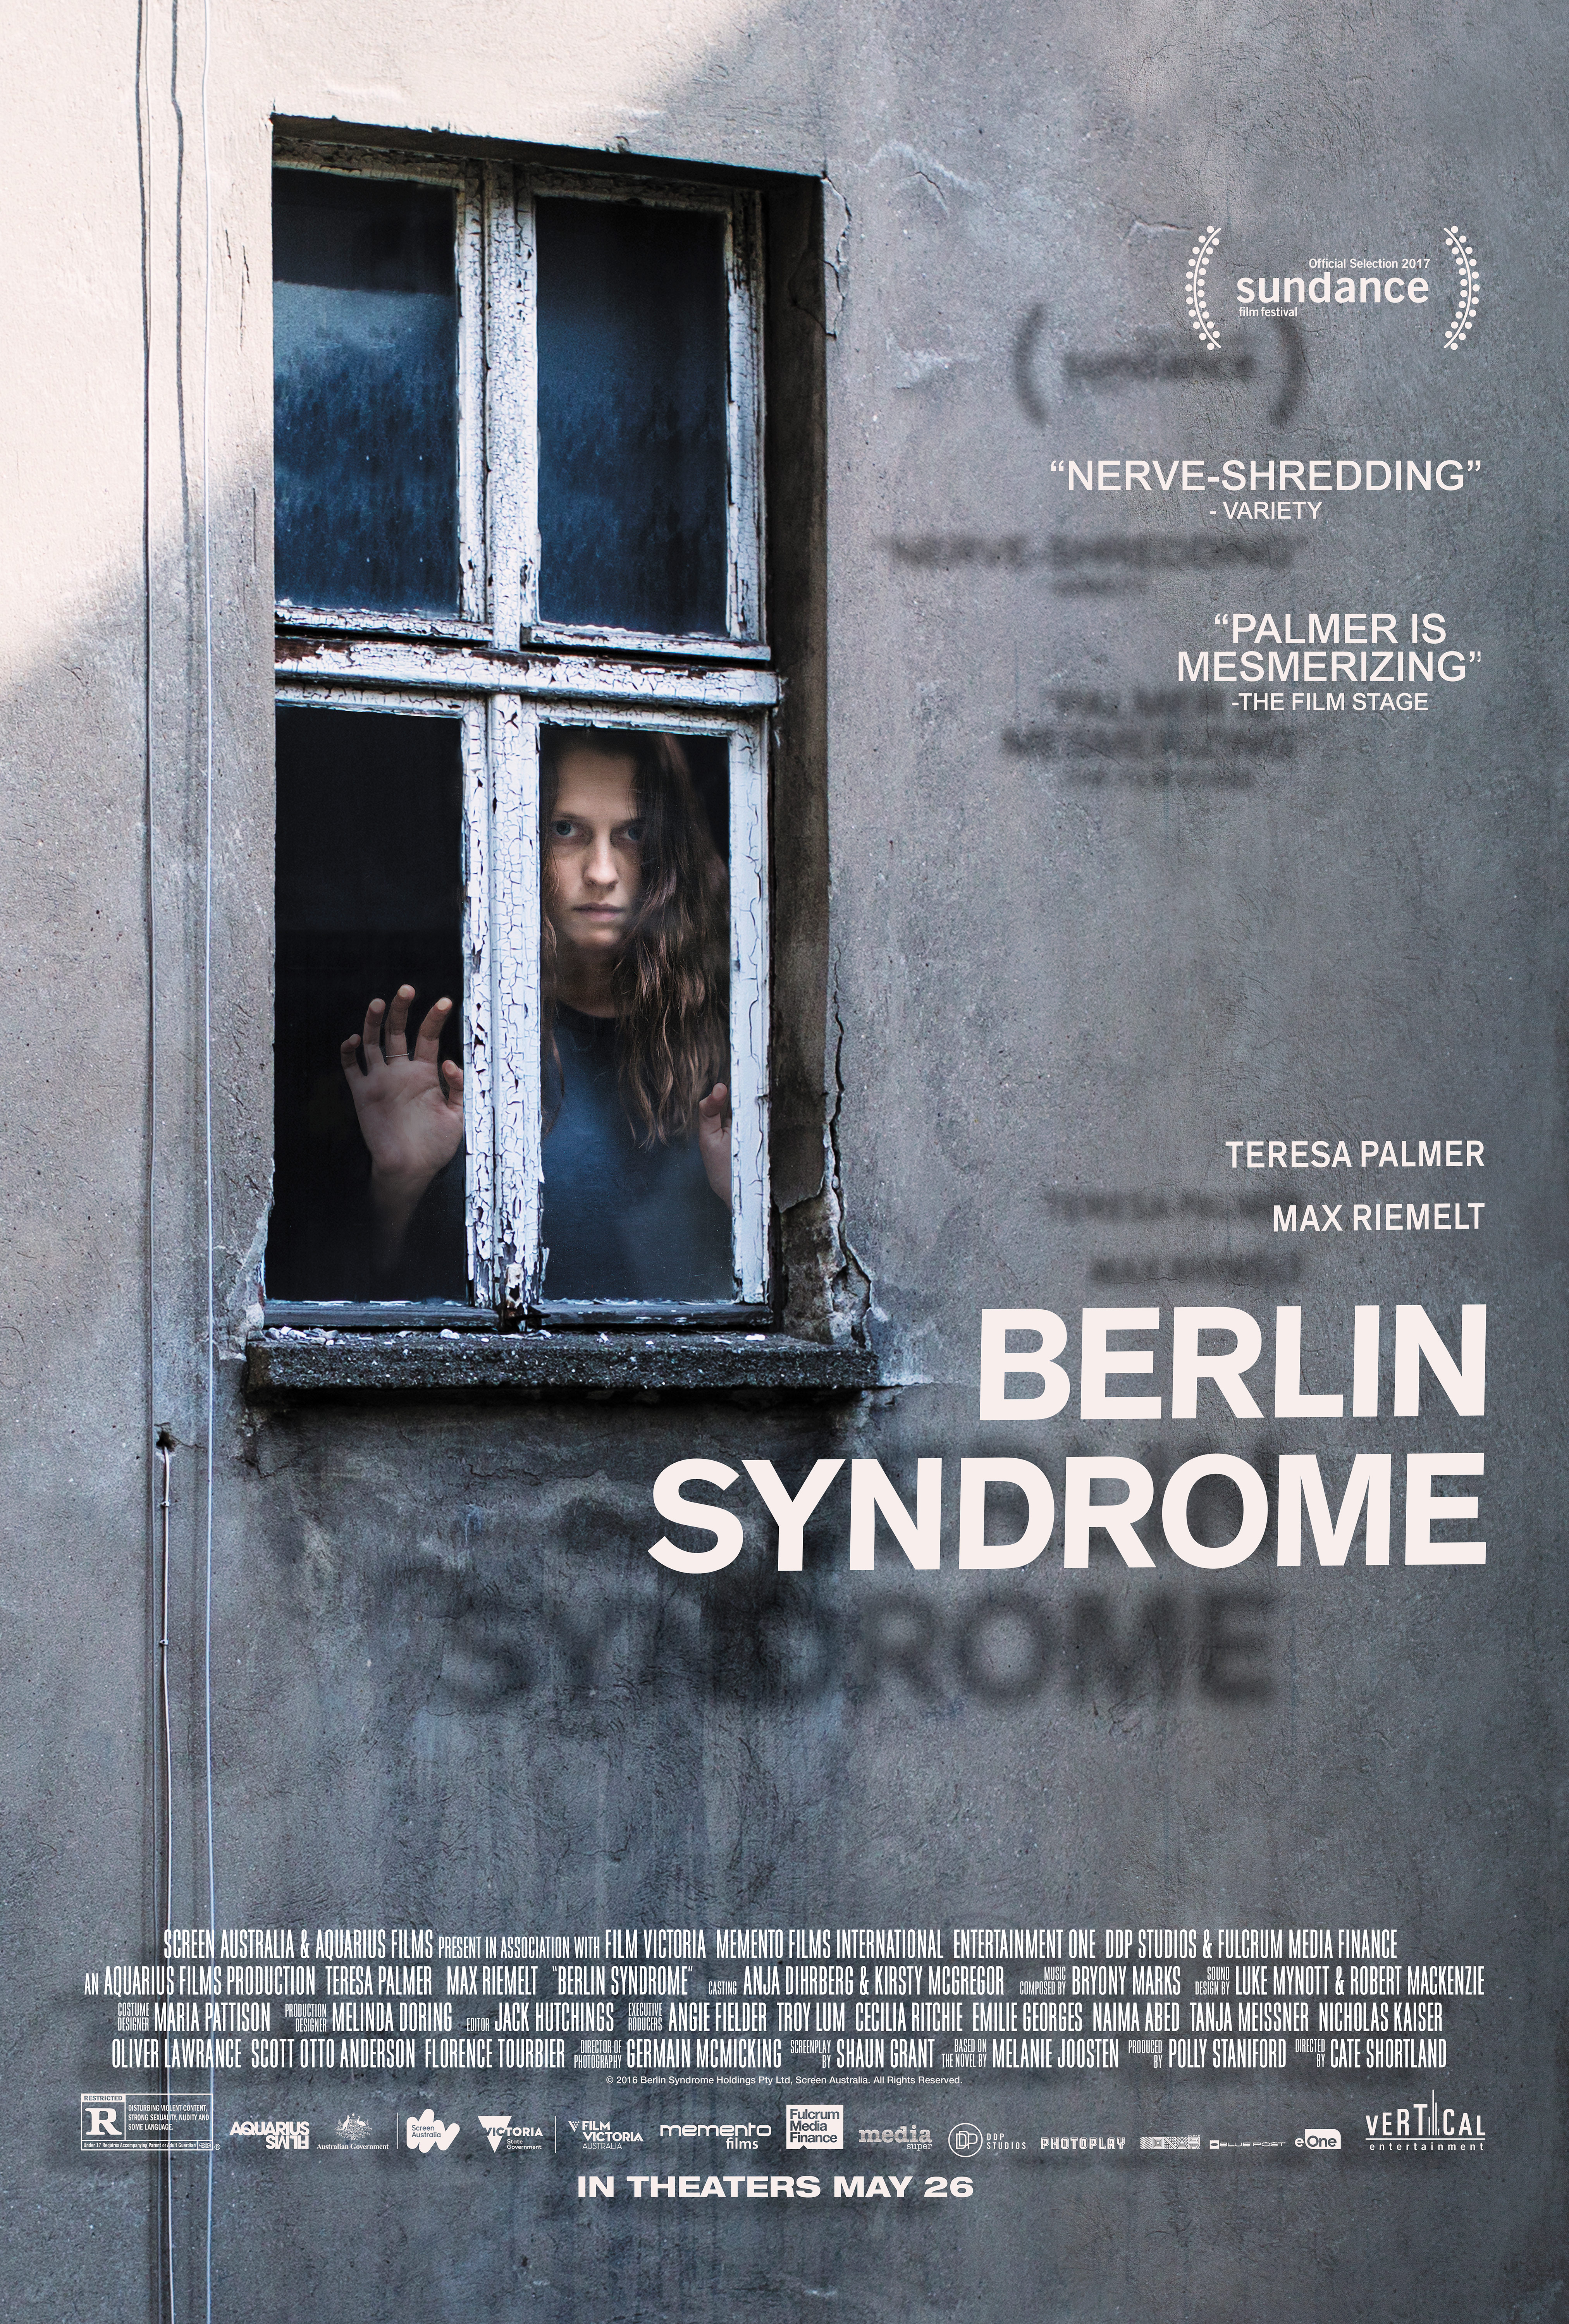 Nonton film Berlin Syndrome layarkaca21 indoxx1 ganool online streaming terbaru